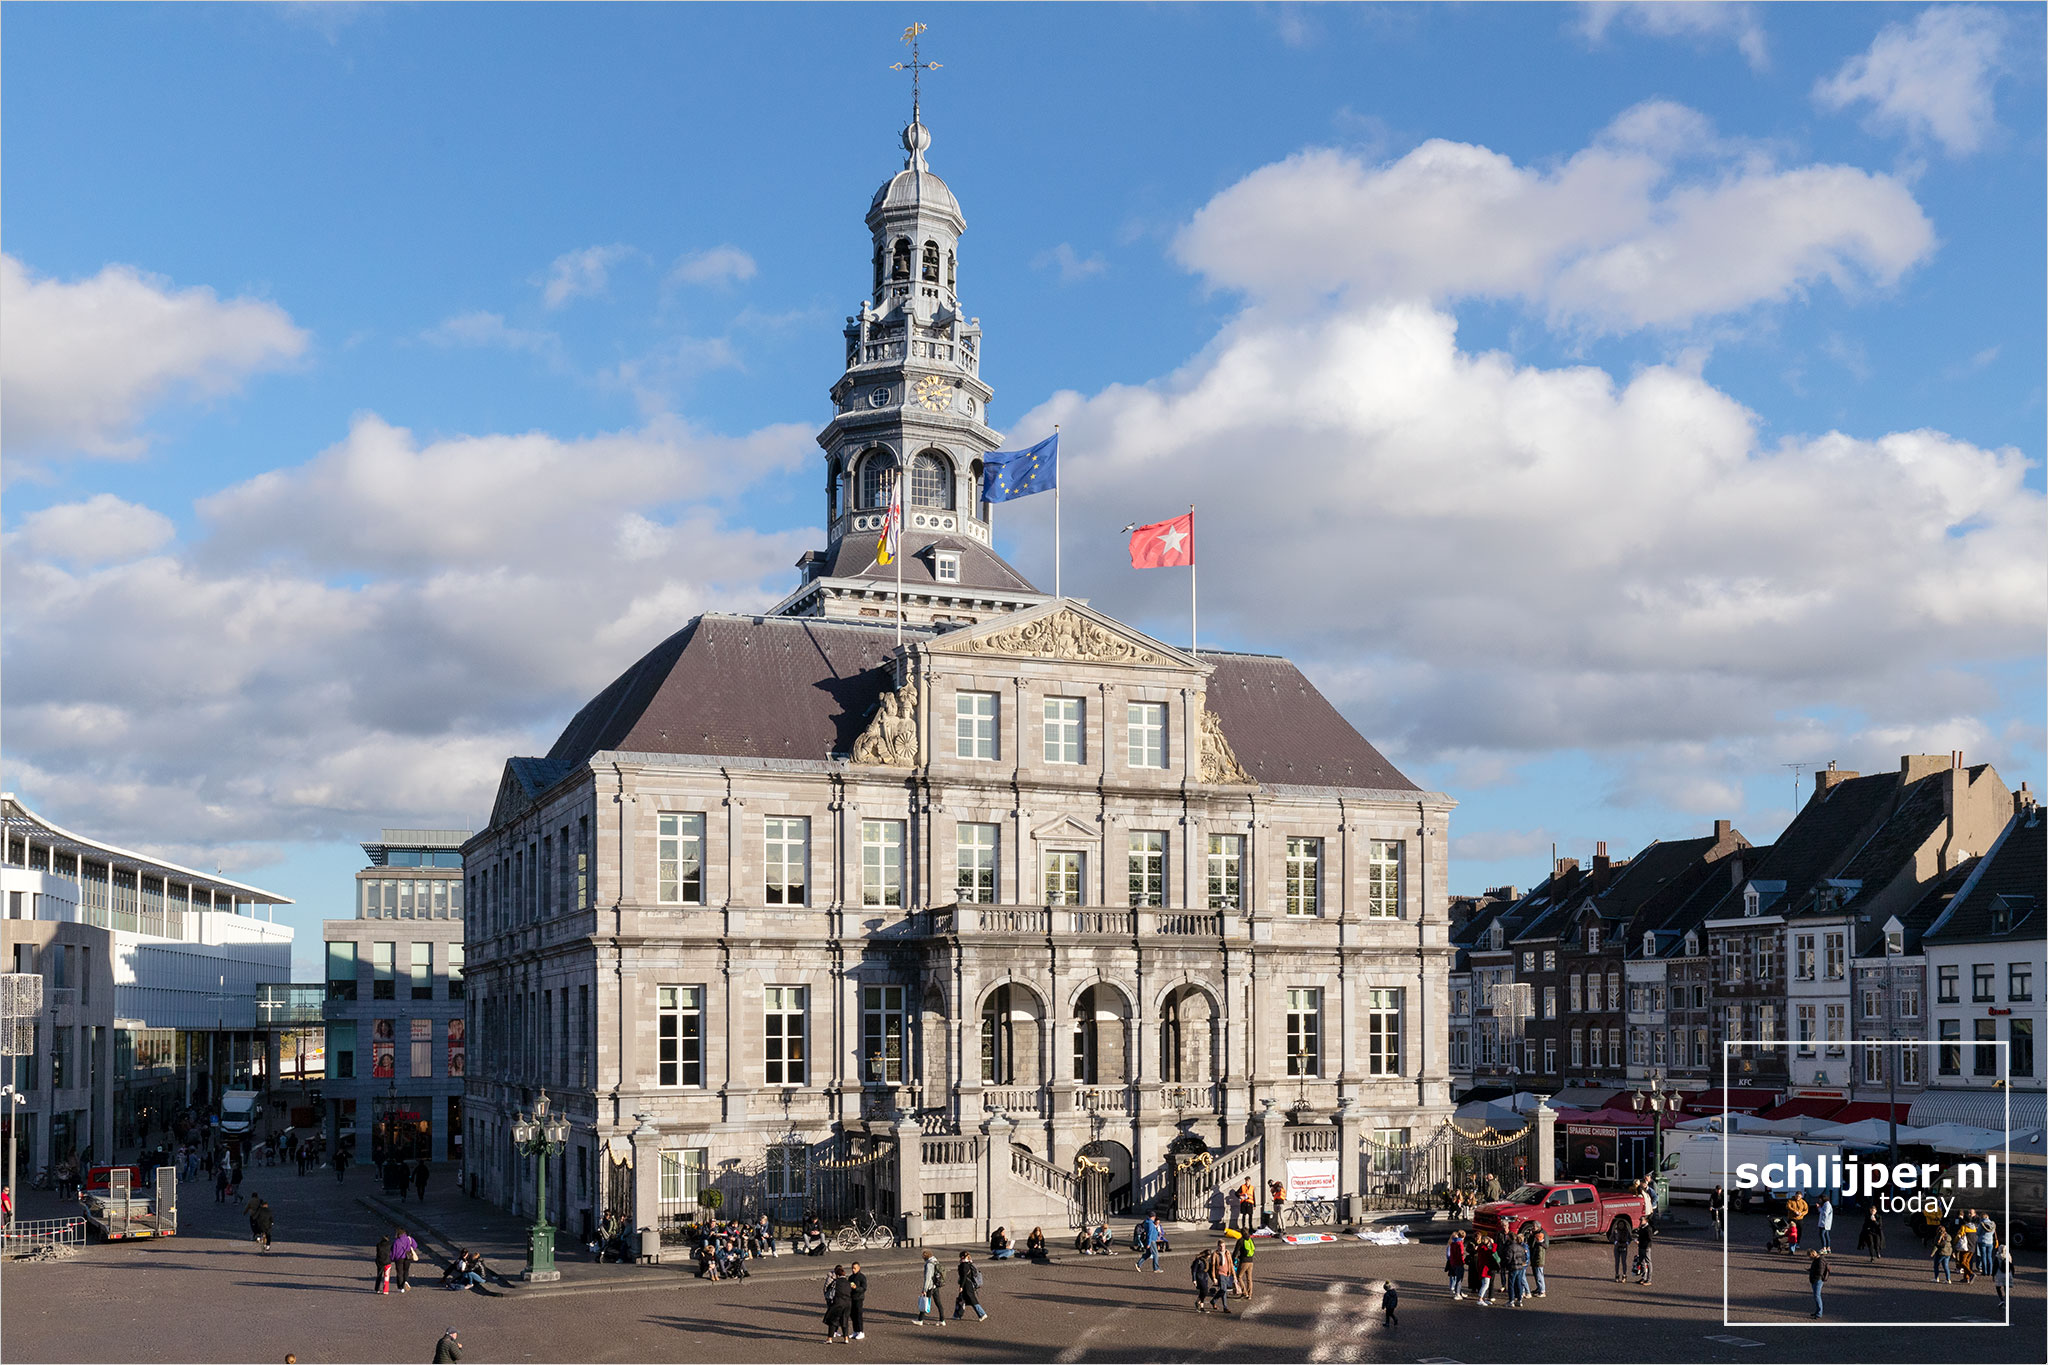 The Netherlands, Maastricht, 1 november 2021